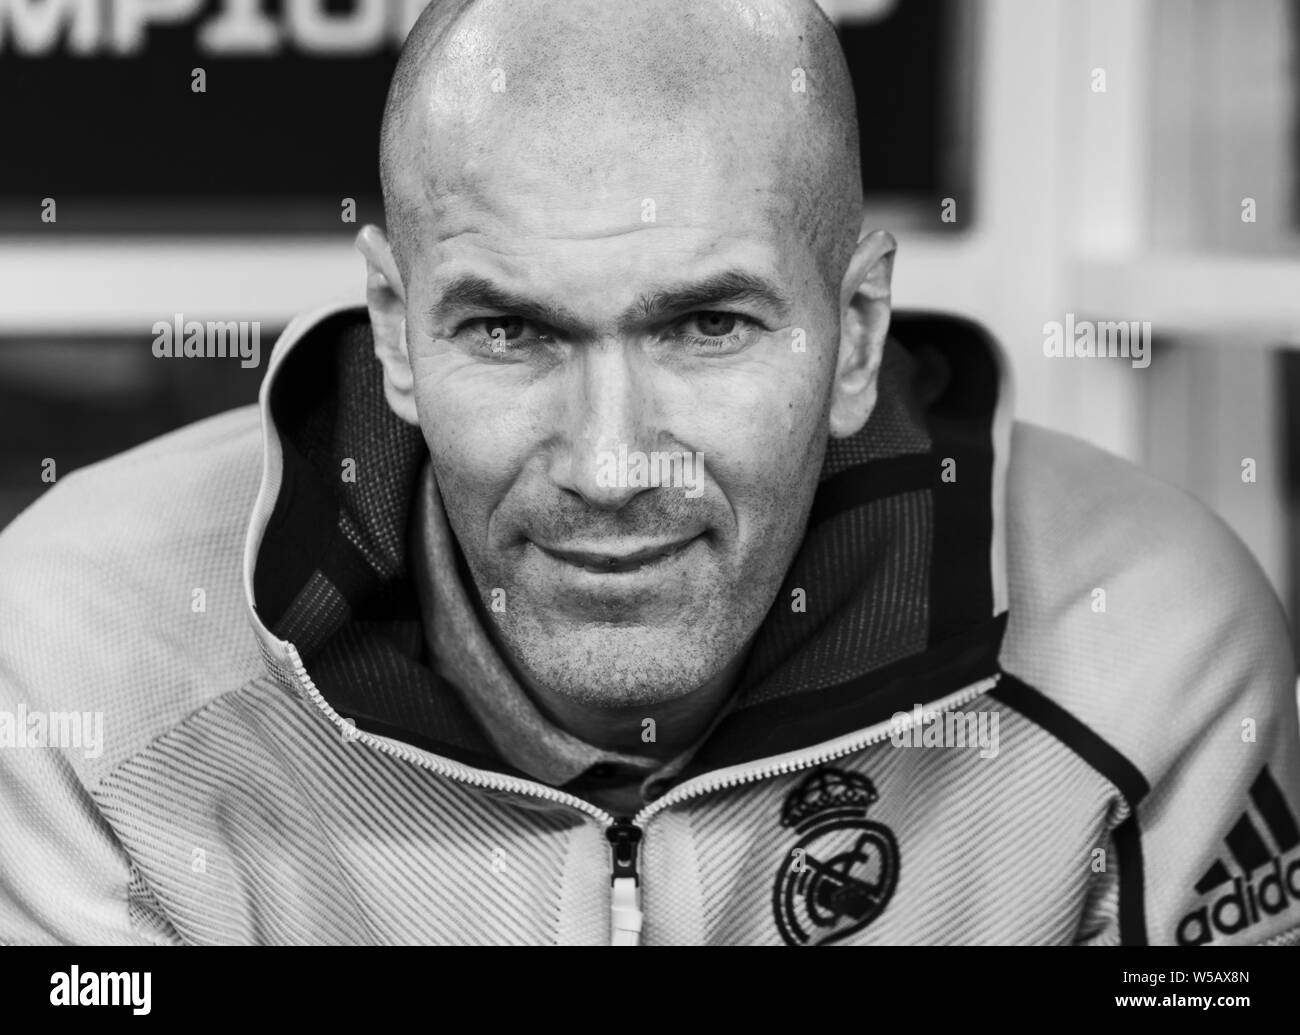 Zinedine zidane football player Black and White Stock Photos & Images ...